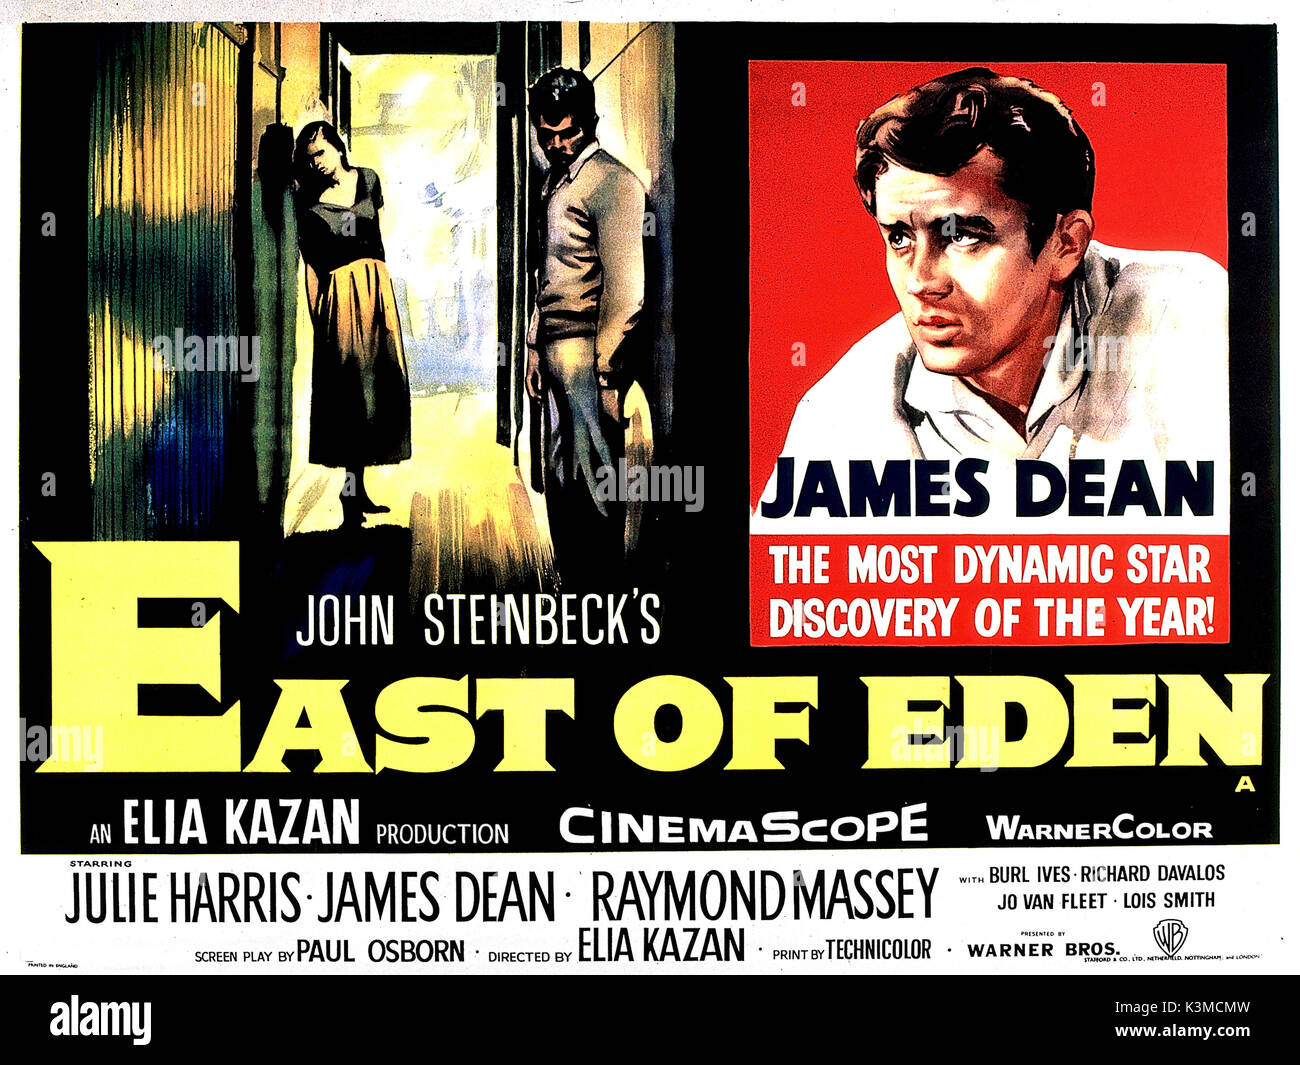 EAST OF EDEN [US 1955] JAMES DEAN     Date: 1955 Stock Photo